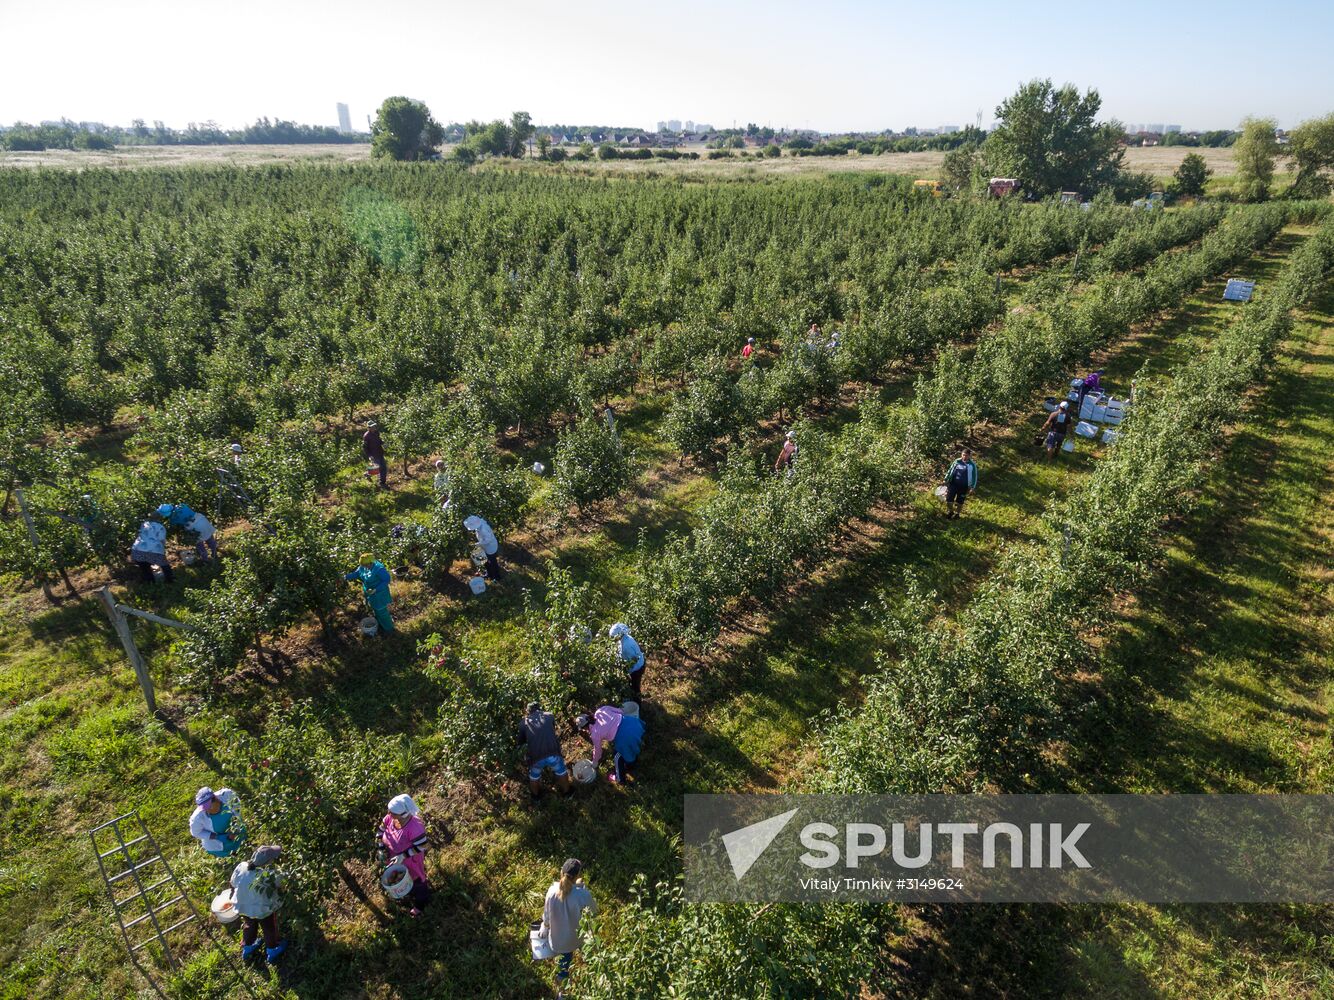 Picking apples in Russia's Krasnodar Territory